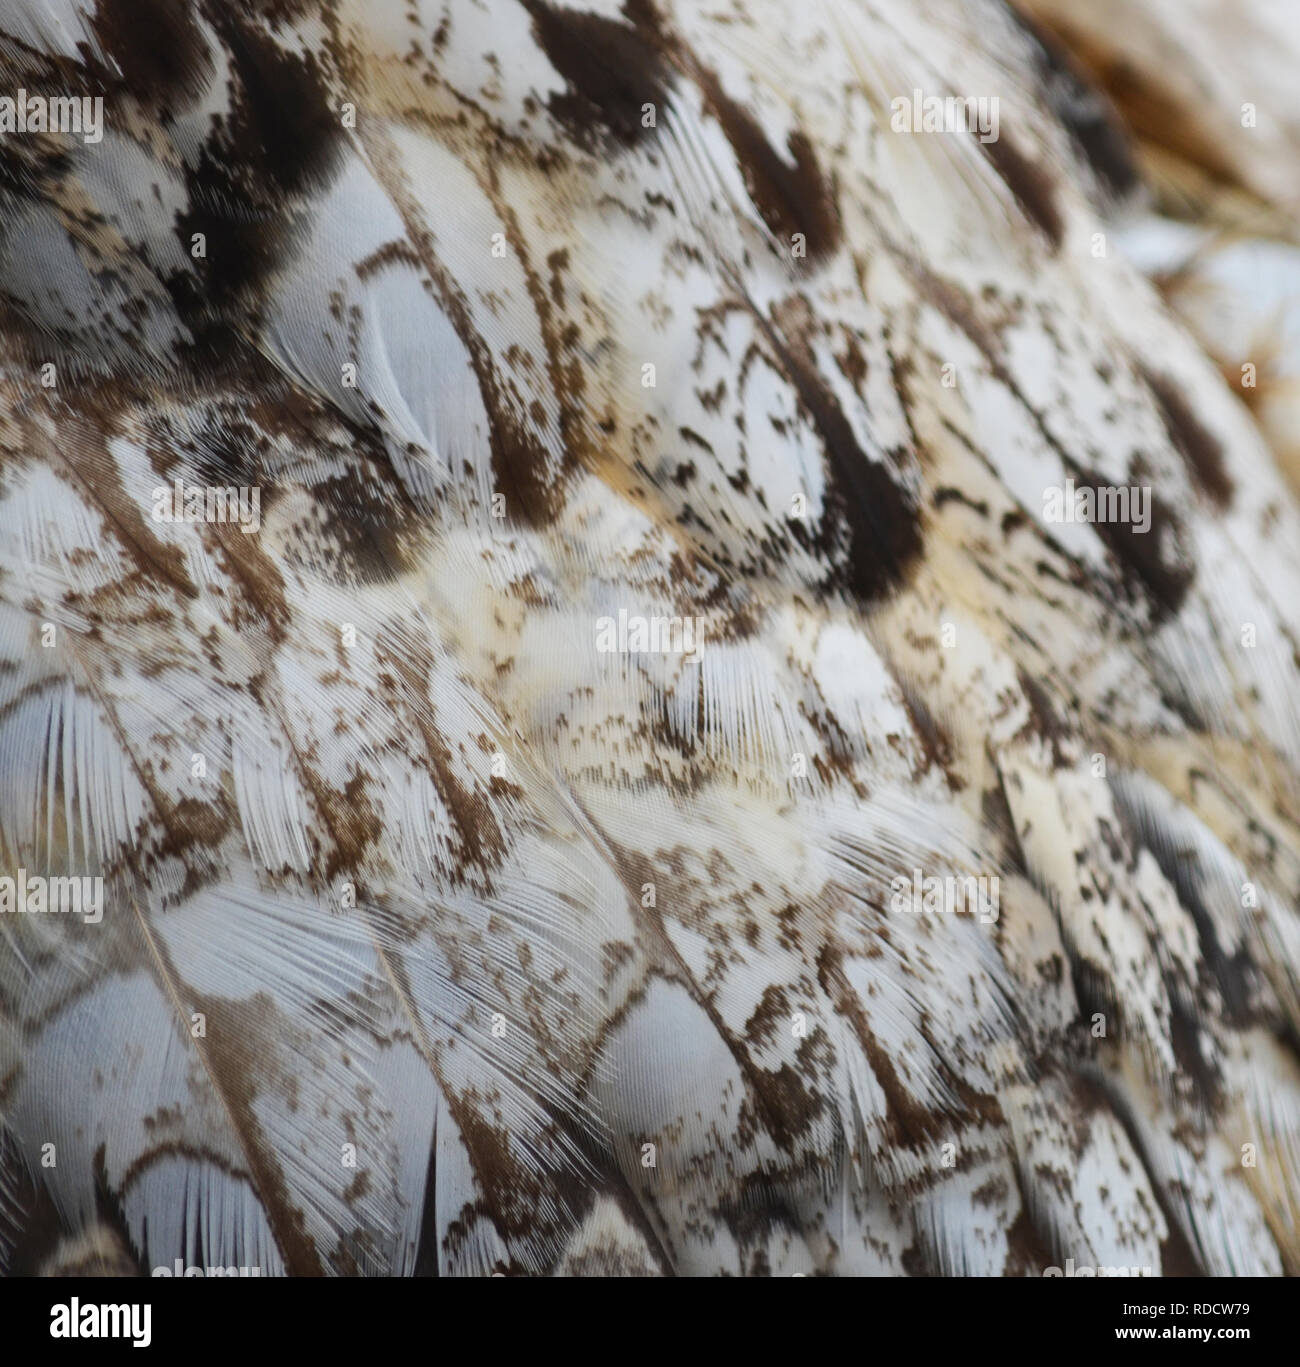 Siberian Eagle Owl Feathers (Bubo bubo yenisseensis) Stock Photo